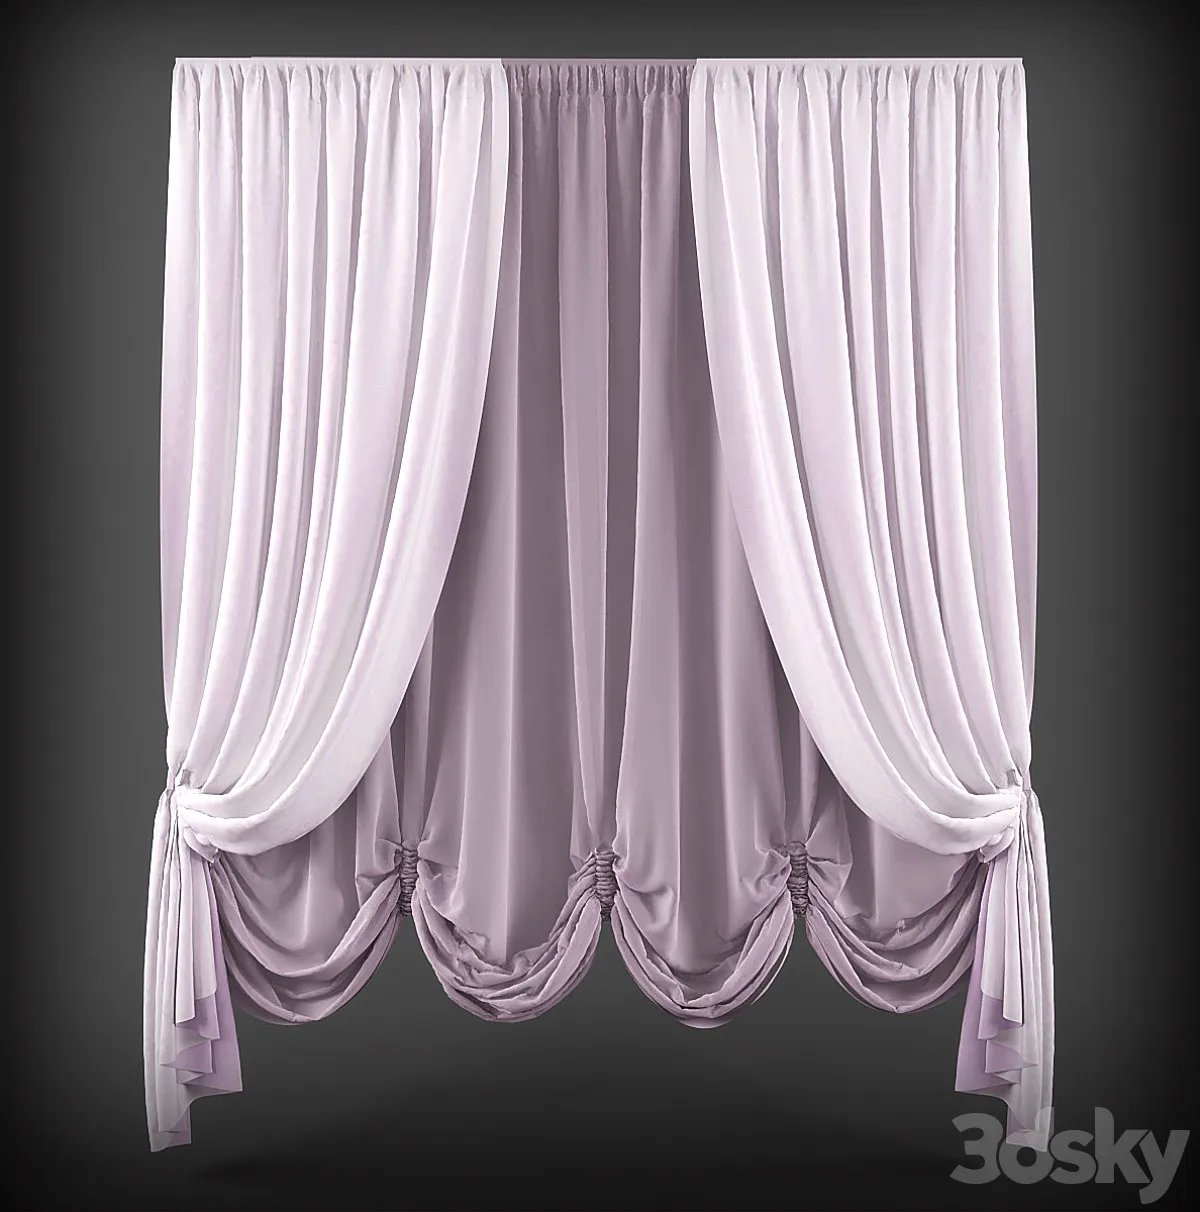 3dsky - Shtory79 - Curtain - 3D model